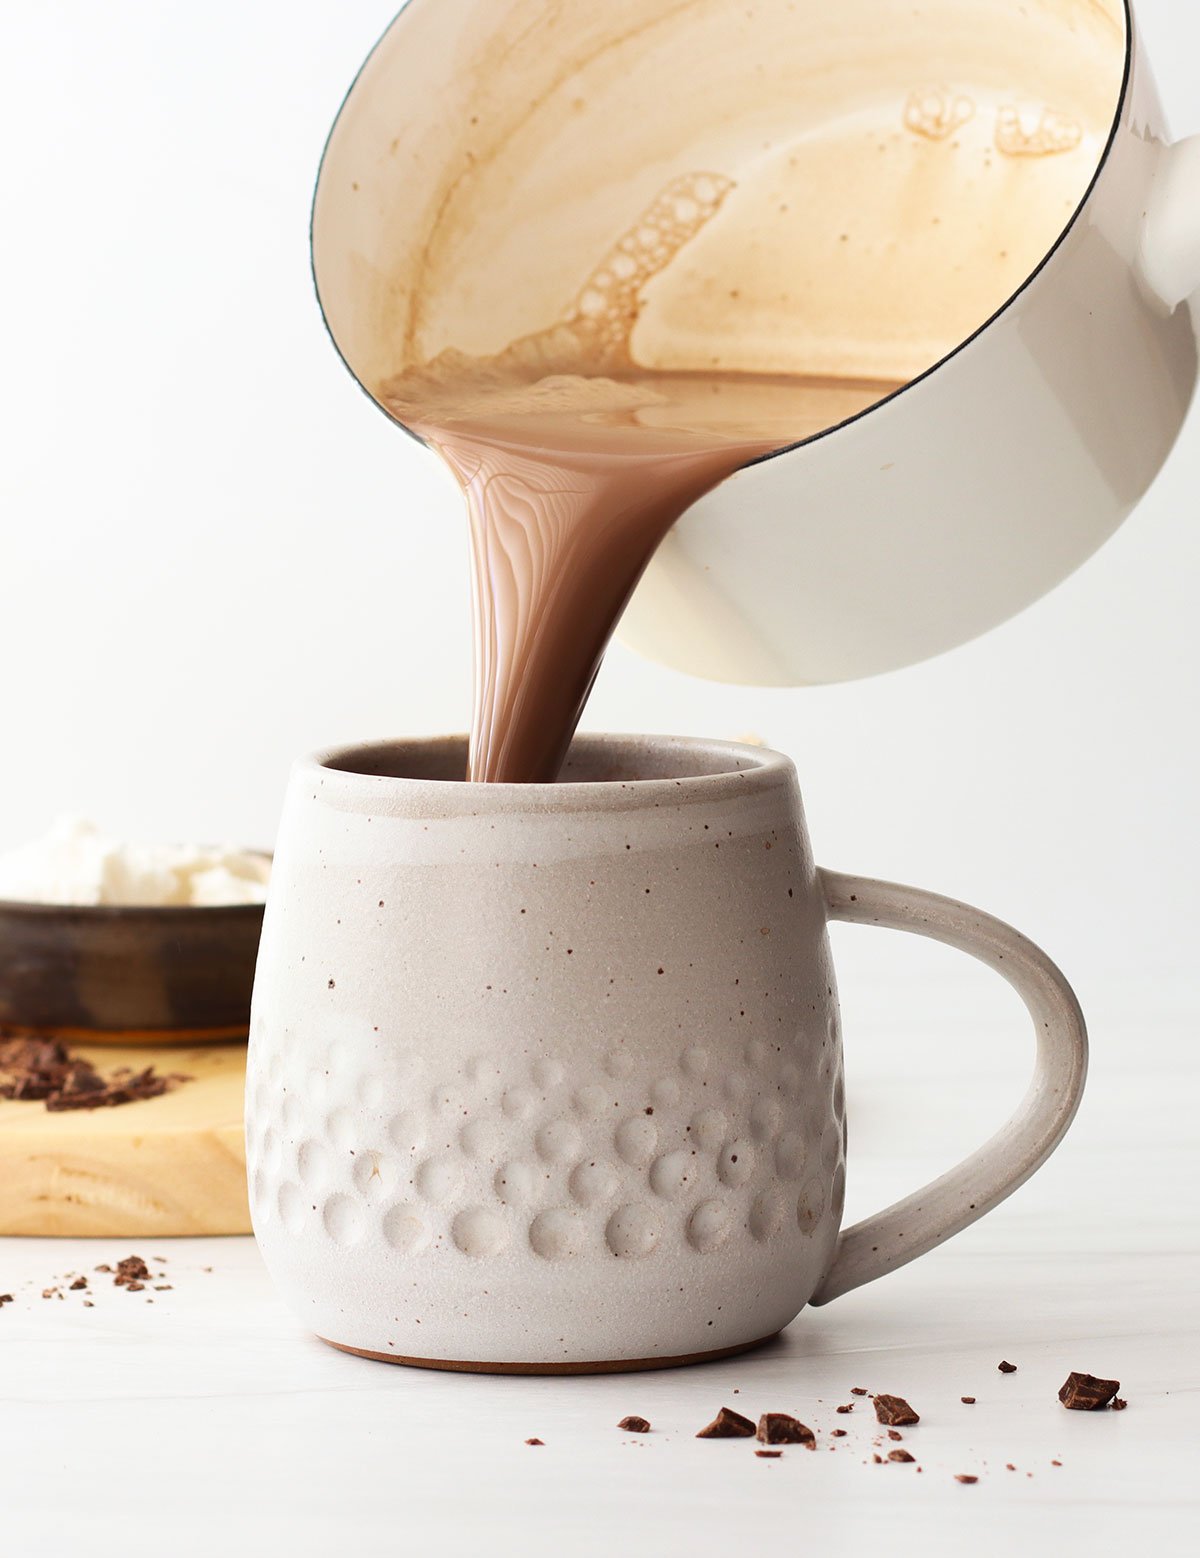 Healthy Hot Chocolate - Detoxinista